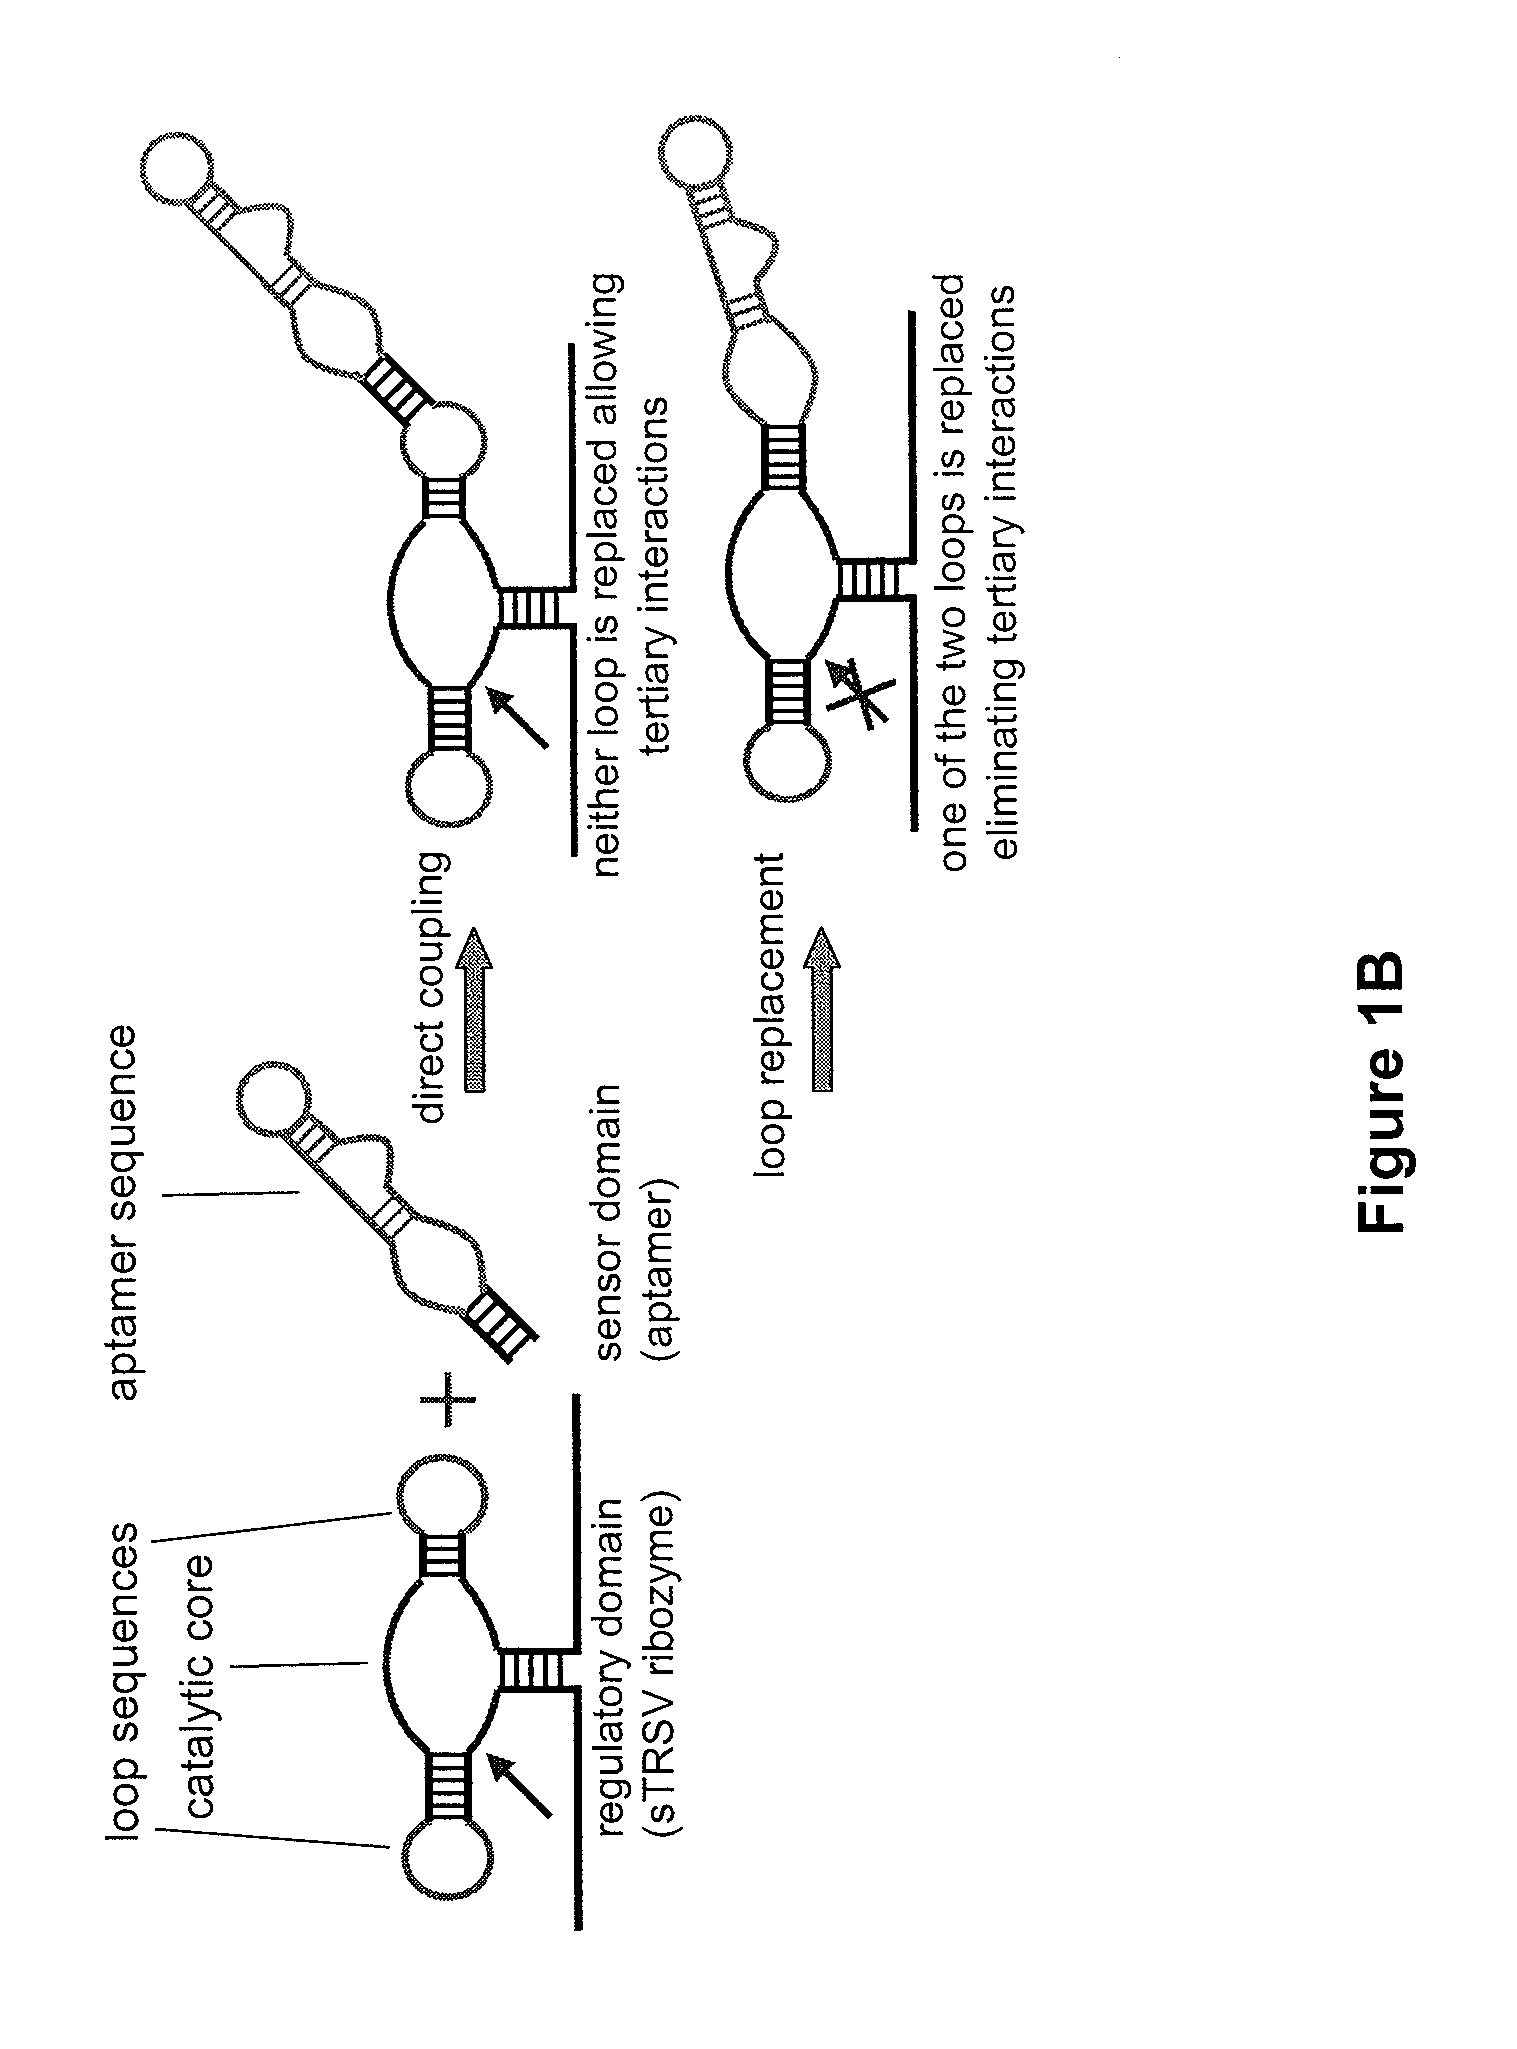 Modular aptamer-regulated ribozymes